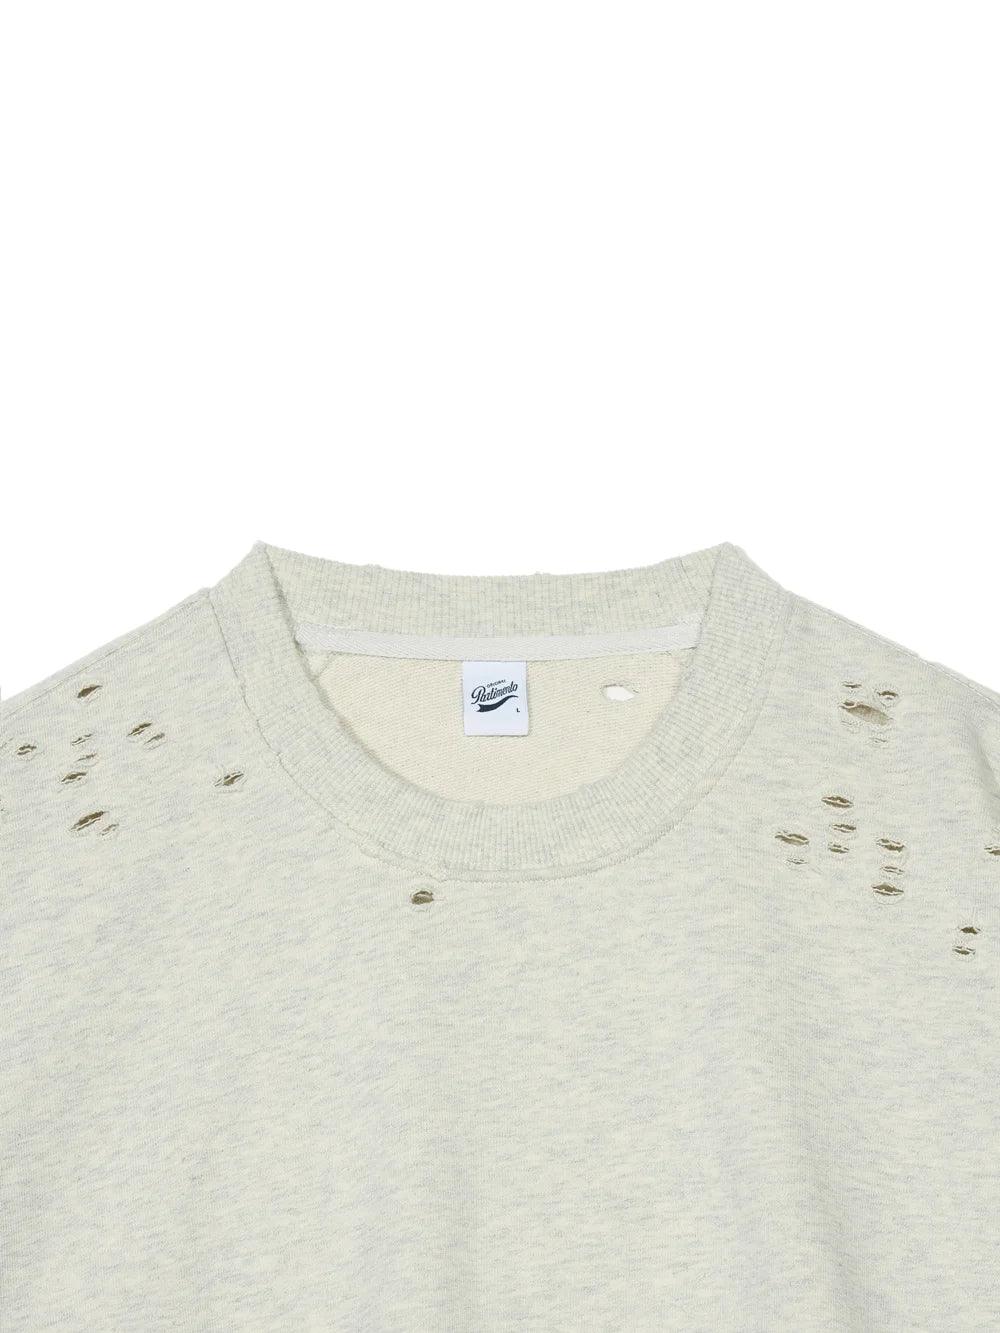 Partimento Destroy Damage Sweatshirt - Light Melange Gray -